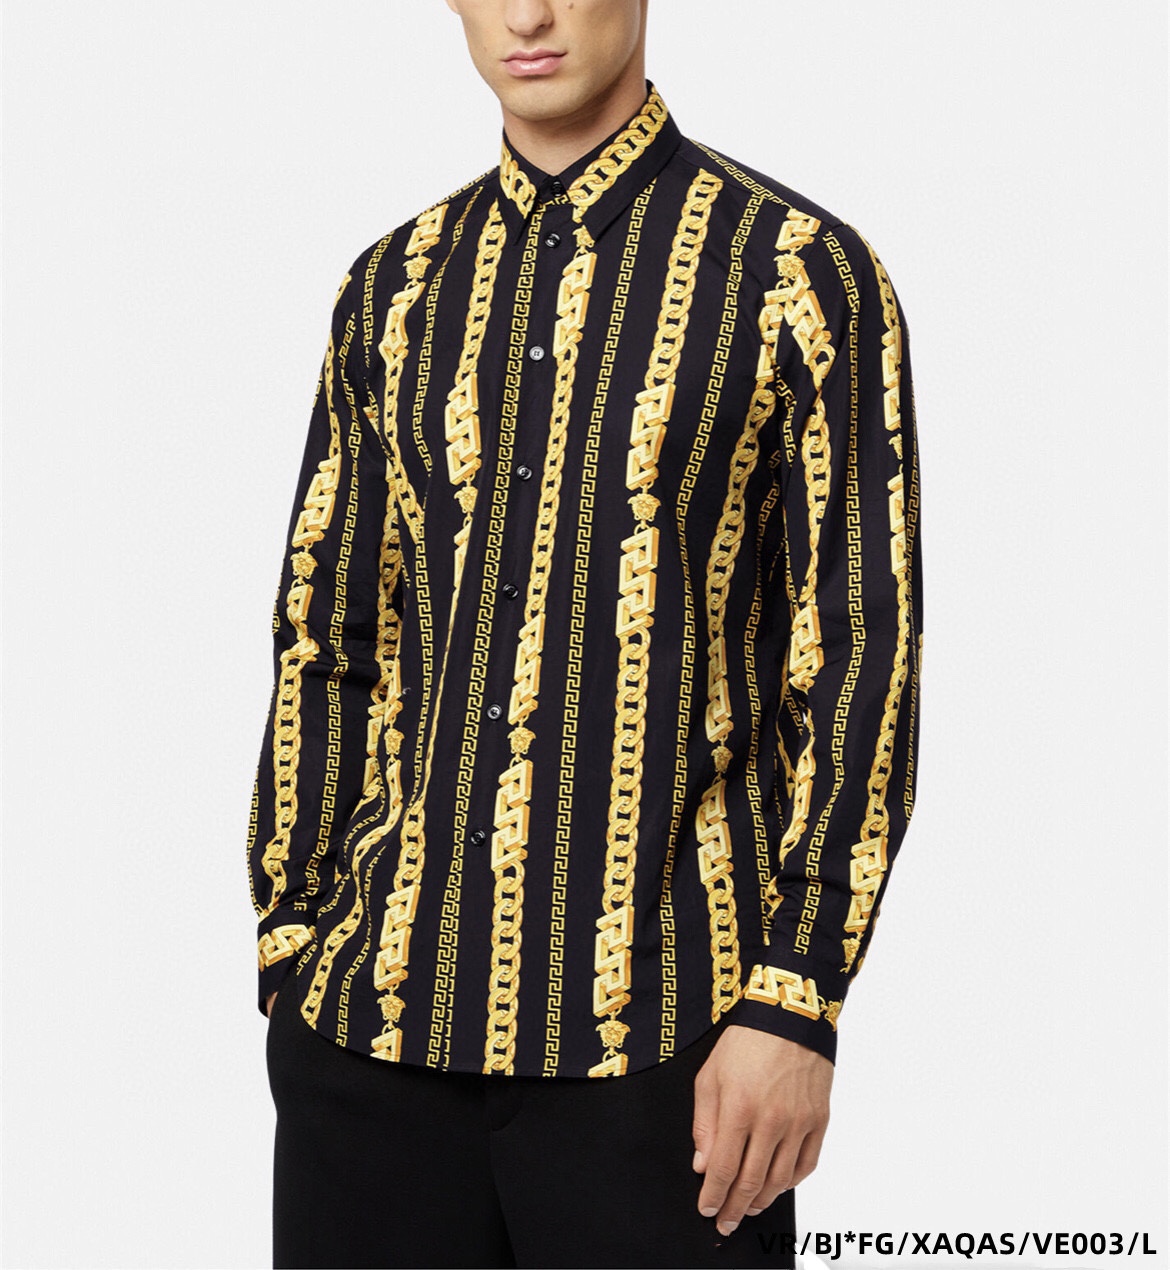 Versace Long Sleeve Shirts For Men # 269800, cheap Versace Shirts, only $48!